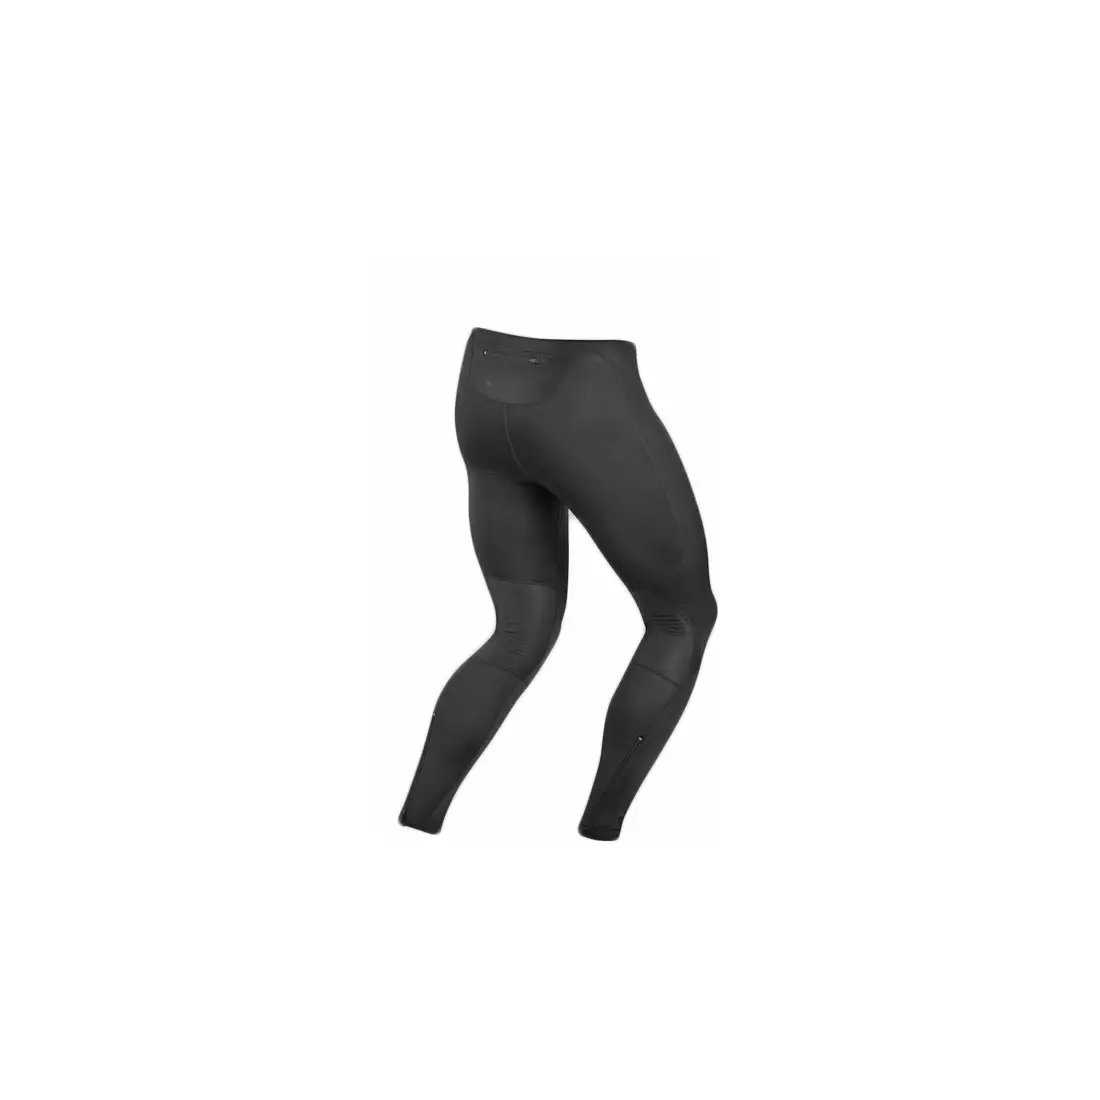 PEARL IZUMI RUN men's running pants FLY 12111407-021, color: black